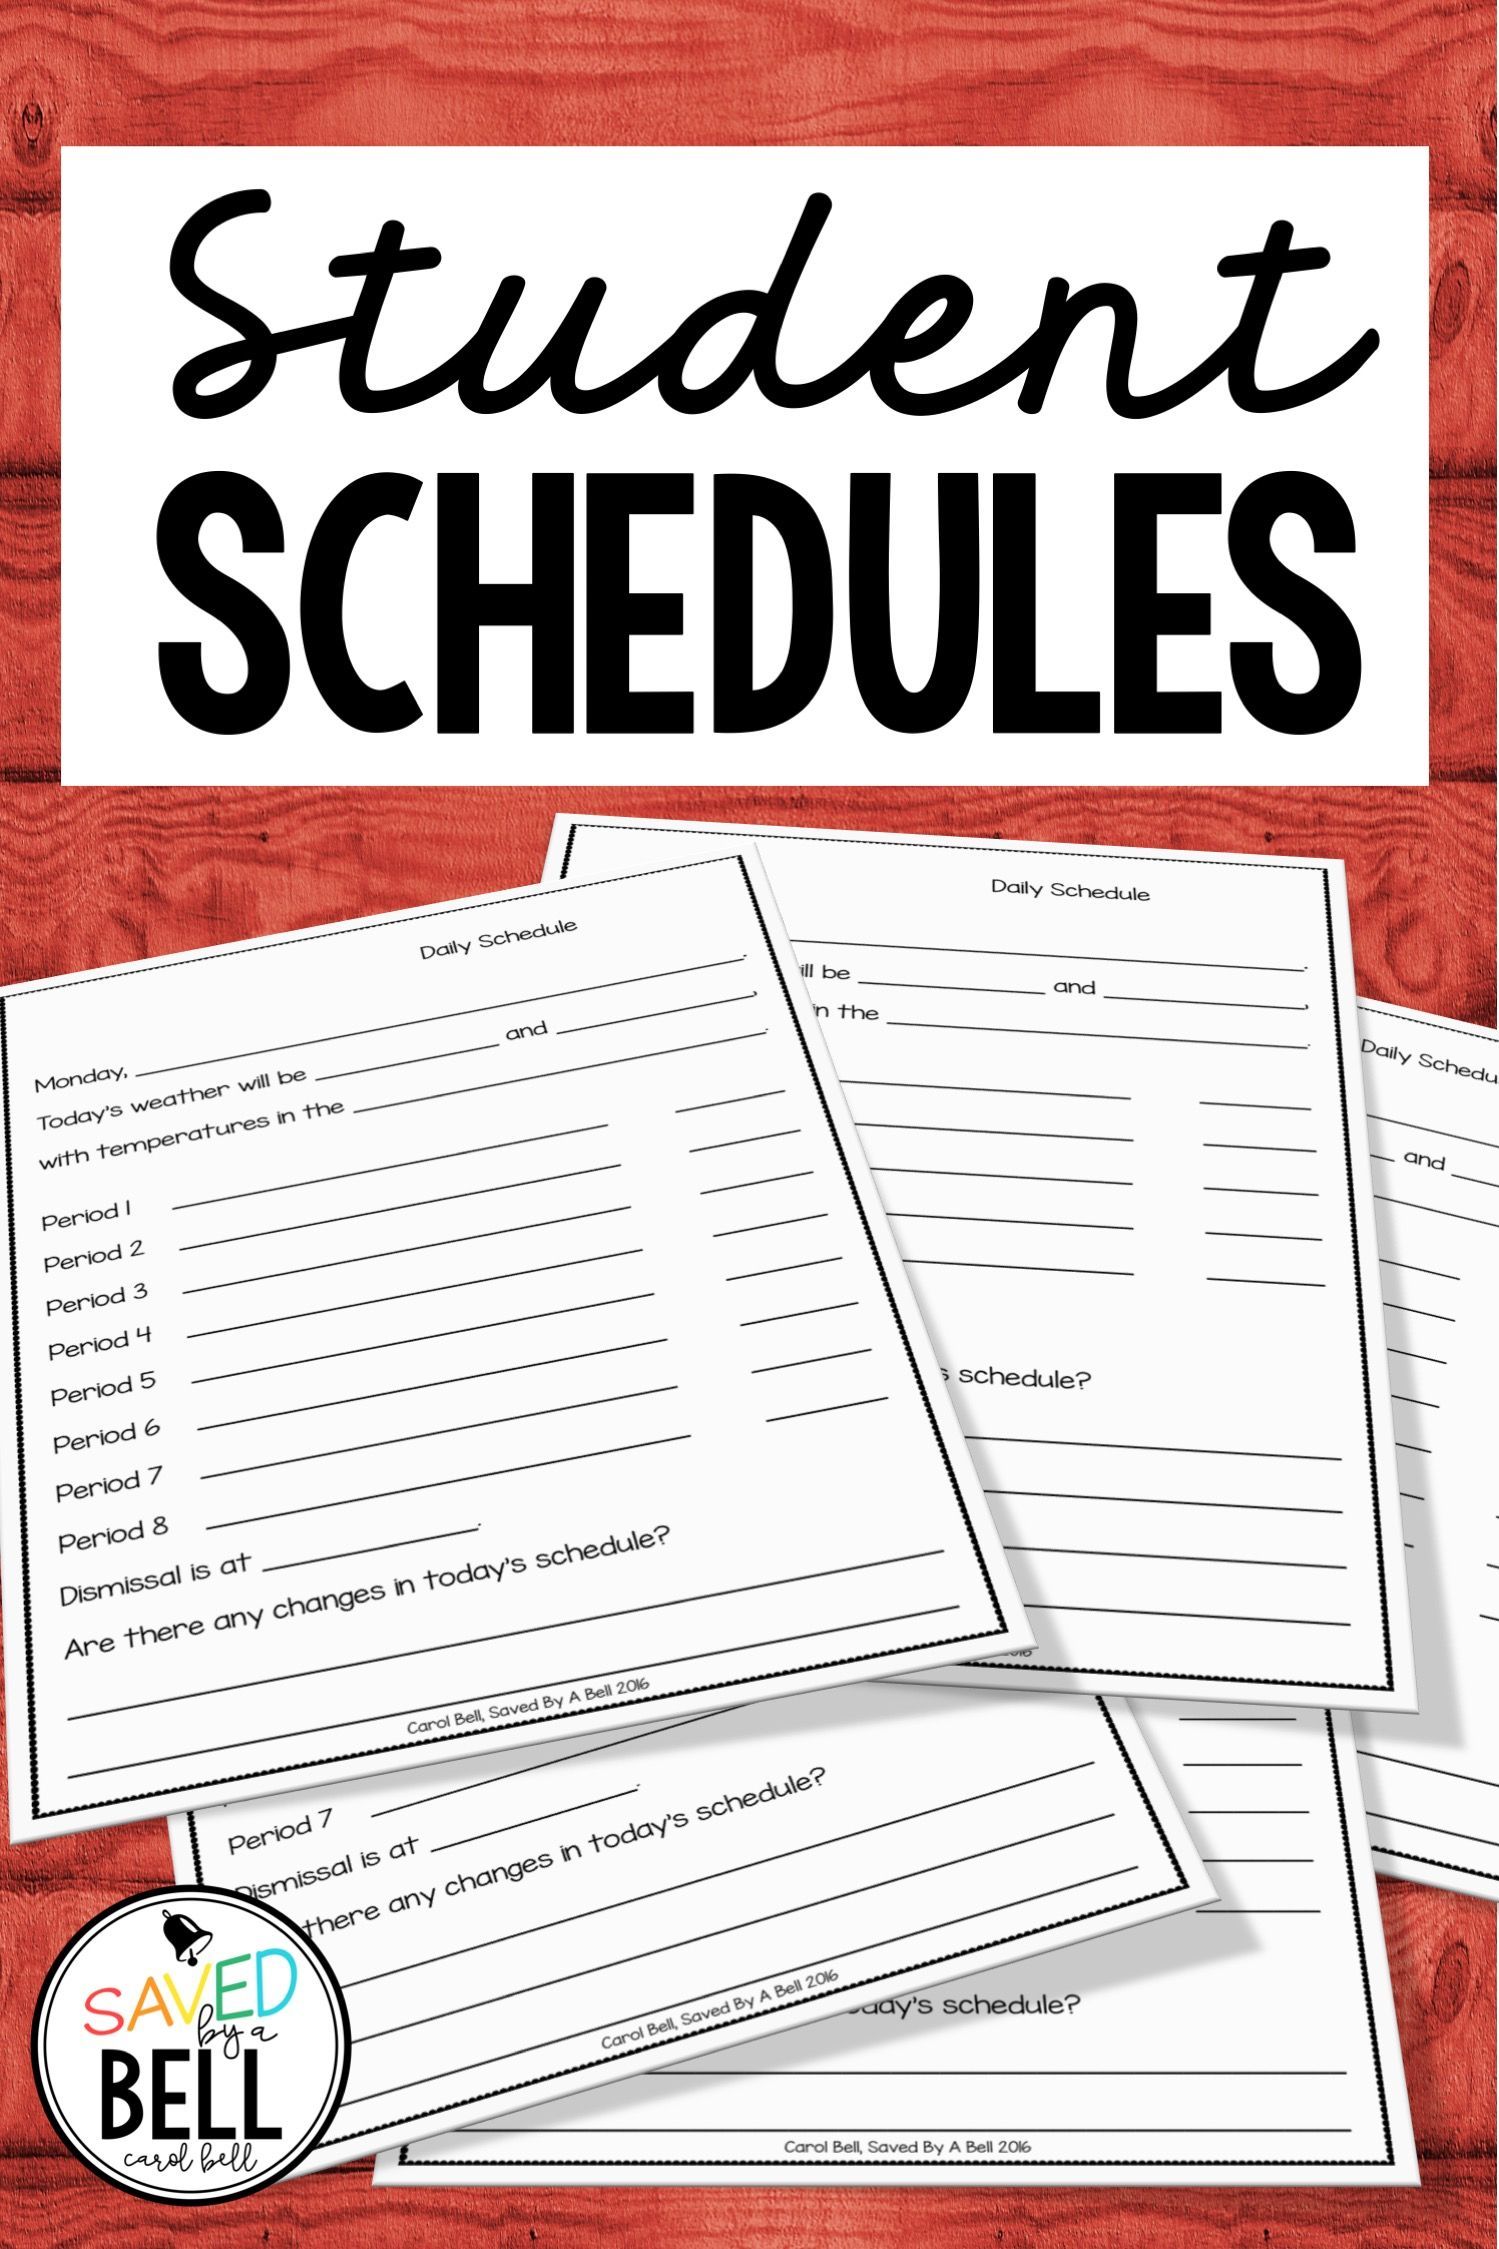 Student schedules